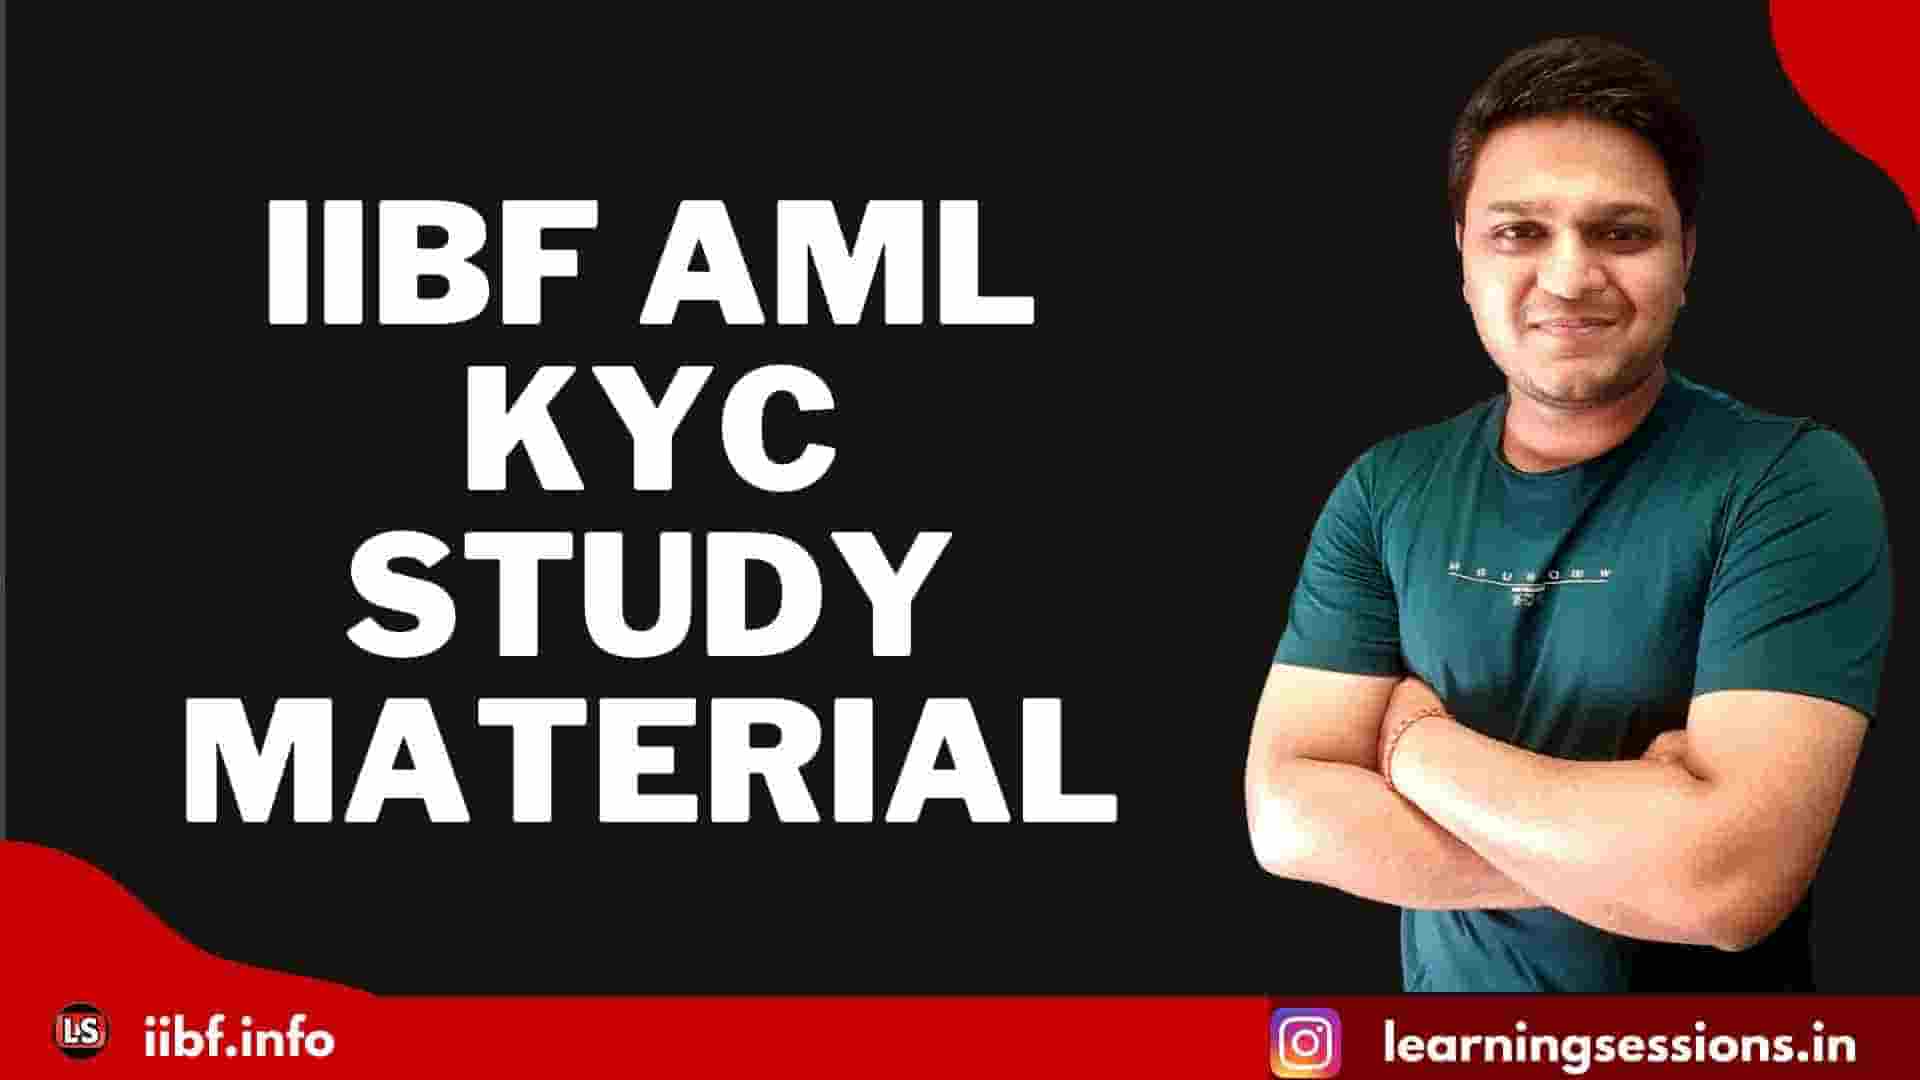 IIBF AML KYC STUDY MATERIAL 2021-2022